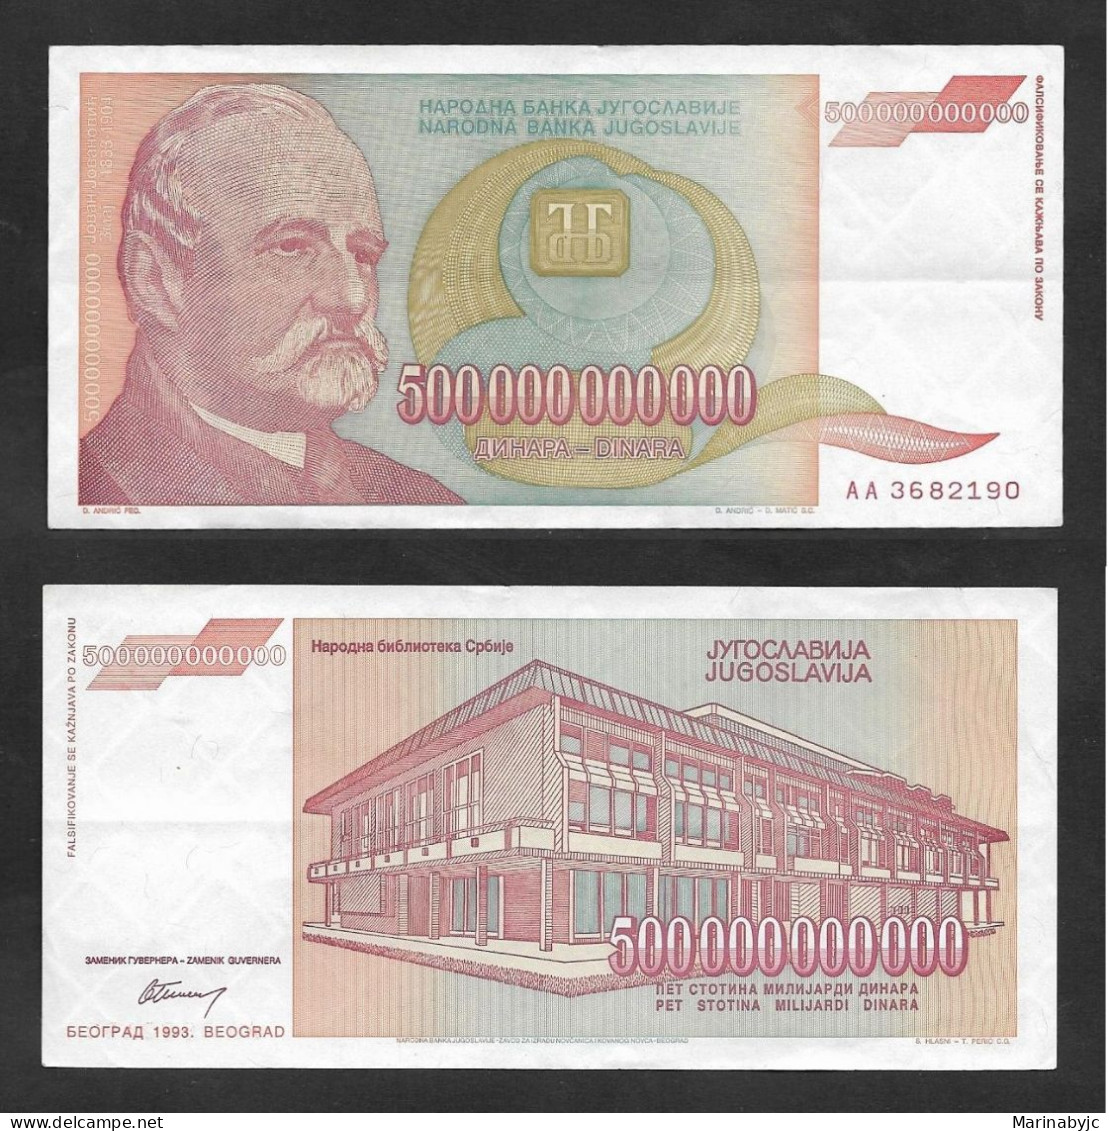 SE)1993 YUGOSLAVIA, BANKNOTE OF 500,000,000,000 DINARS OF THE CENTRAL BANK OF YUGOSLAVIA, WITH REVERSE, VF - Usados